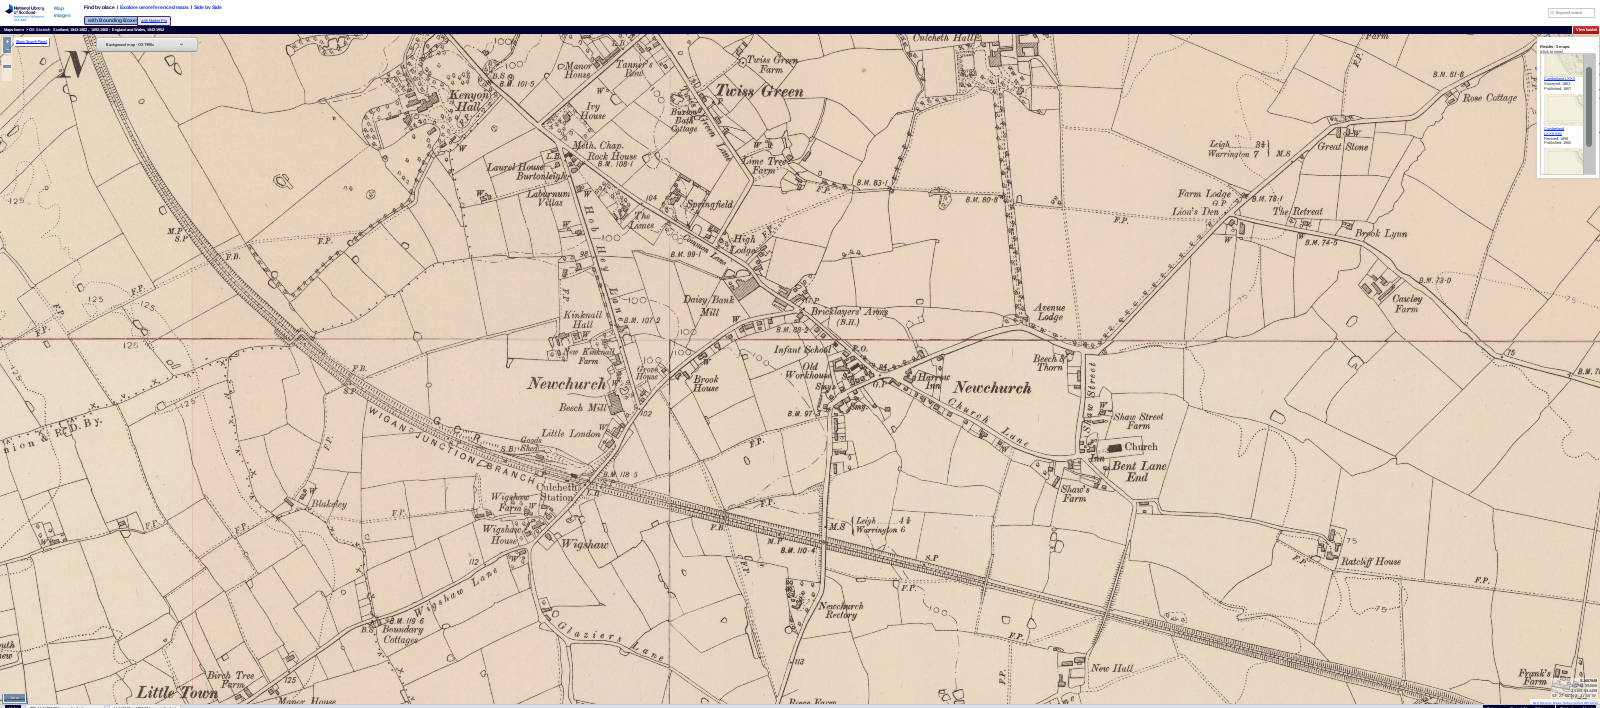 Culcheth 1900 OS map Screenshot 2019 02 28 18 50 46